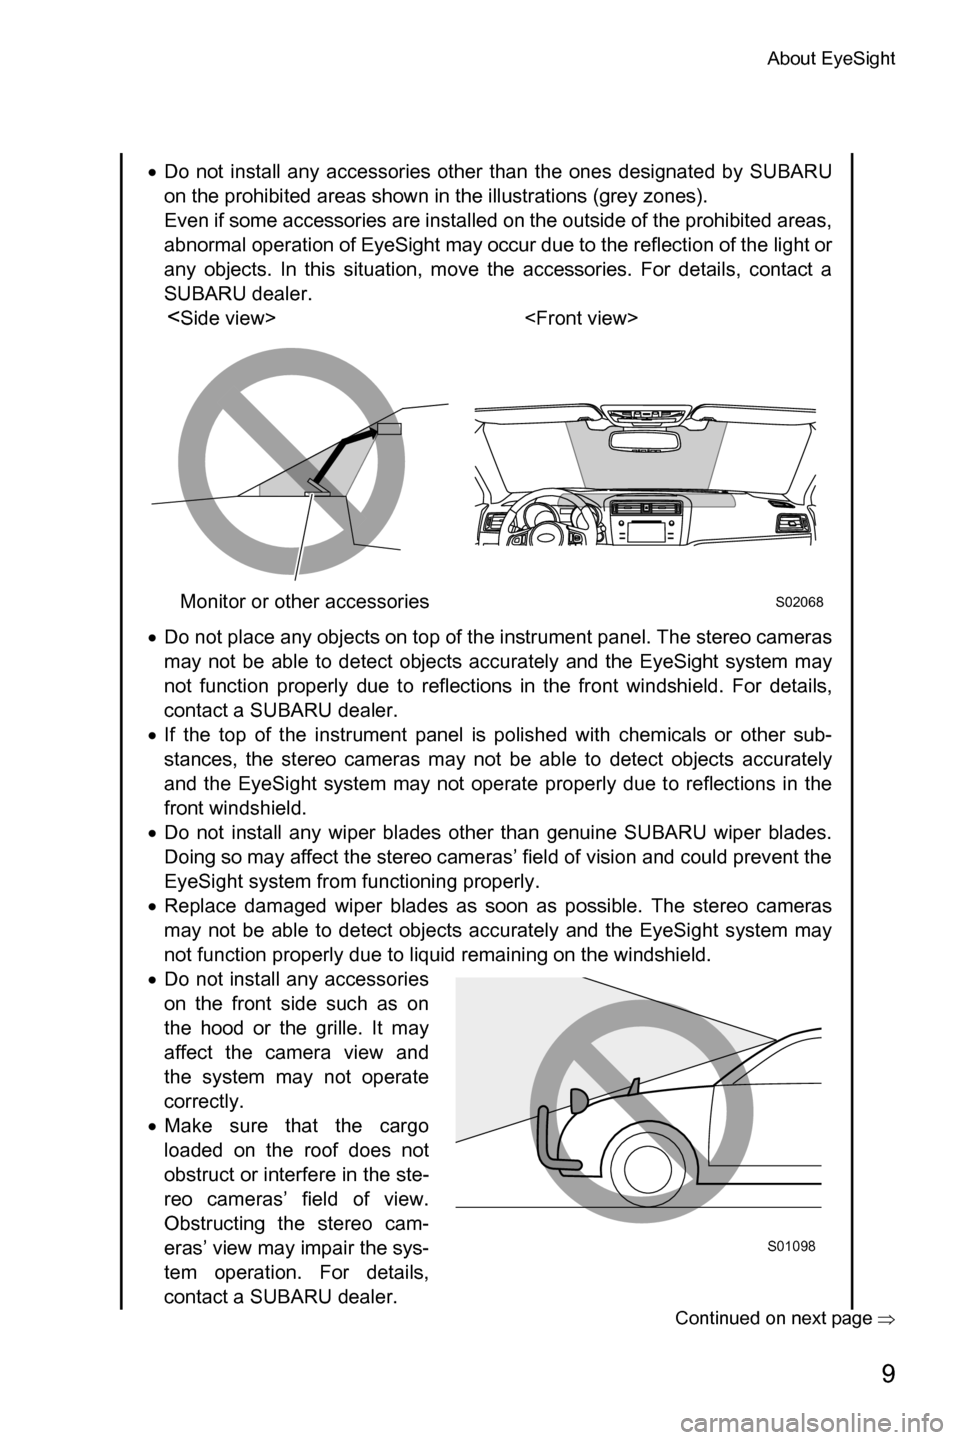 SUBARU LEGACY 2016 6.G Driving Assist Manual About EyeSight
9
�Continued on next page��Ÿ
�xDo not install any accessories other than the ones designated by SUBARU
on the prohibited areas shown in the illustrations (grey zones). 
Even if some 